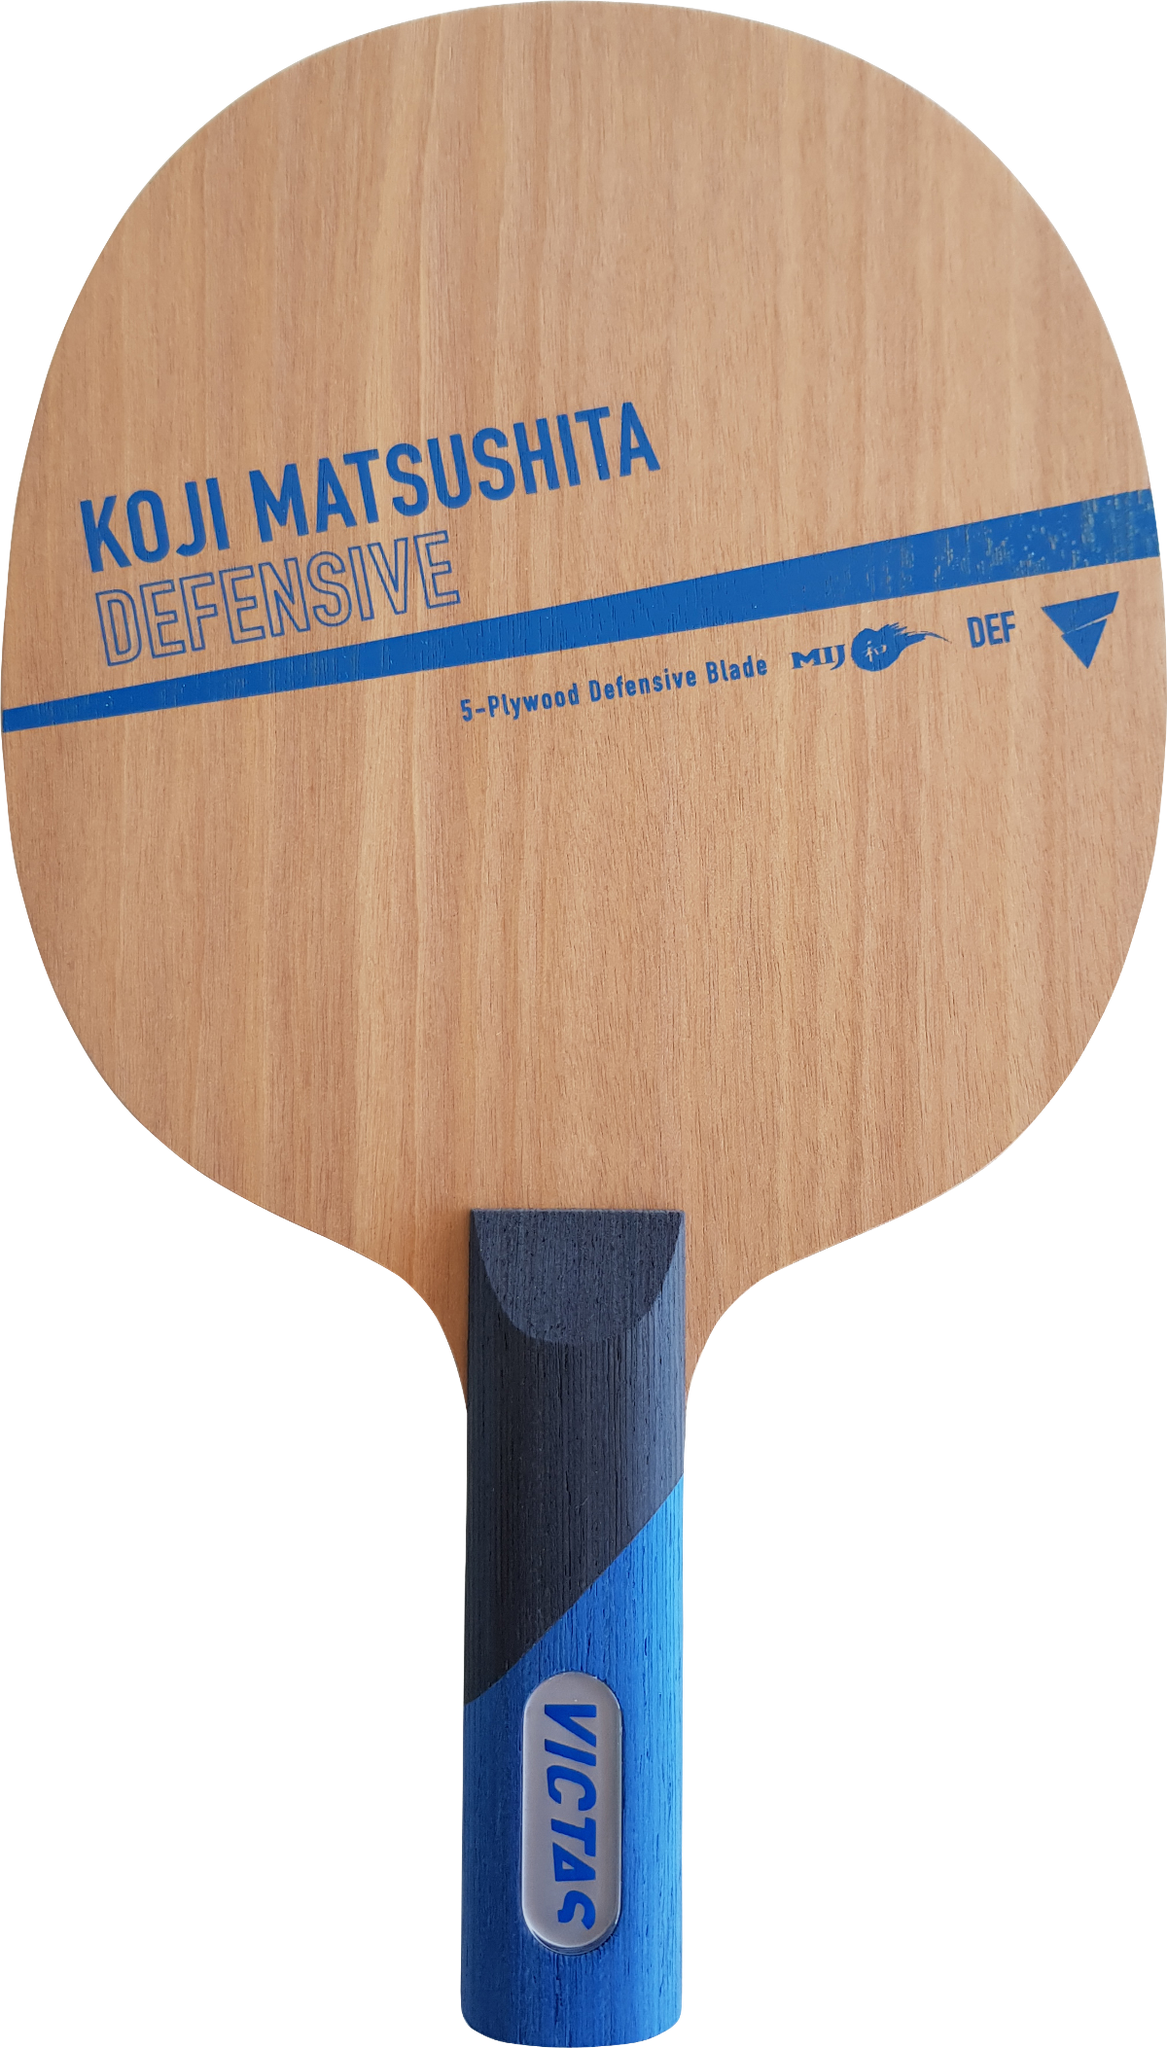 Victas - Koji Matsushita Defensive (Order item)